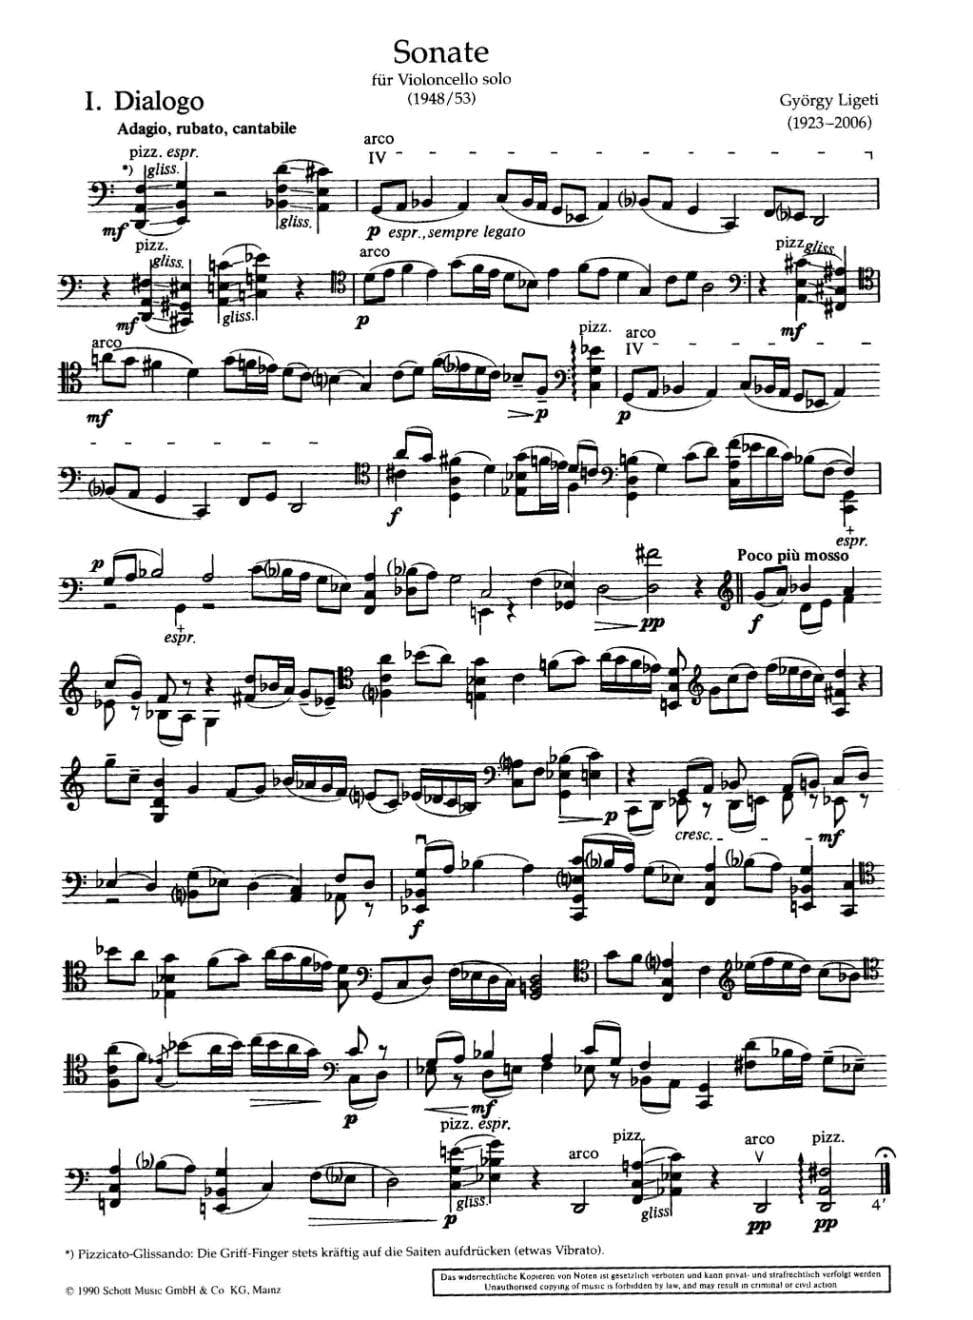 Ligeti, György - Sonata for Solo Cello - Schott Edition